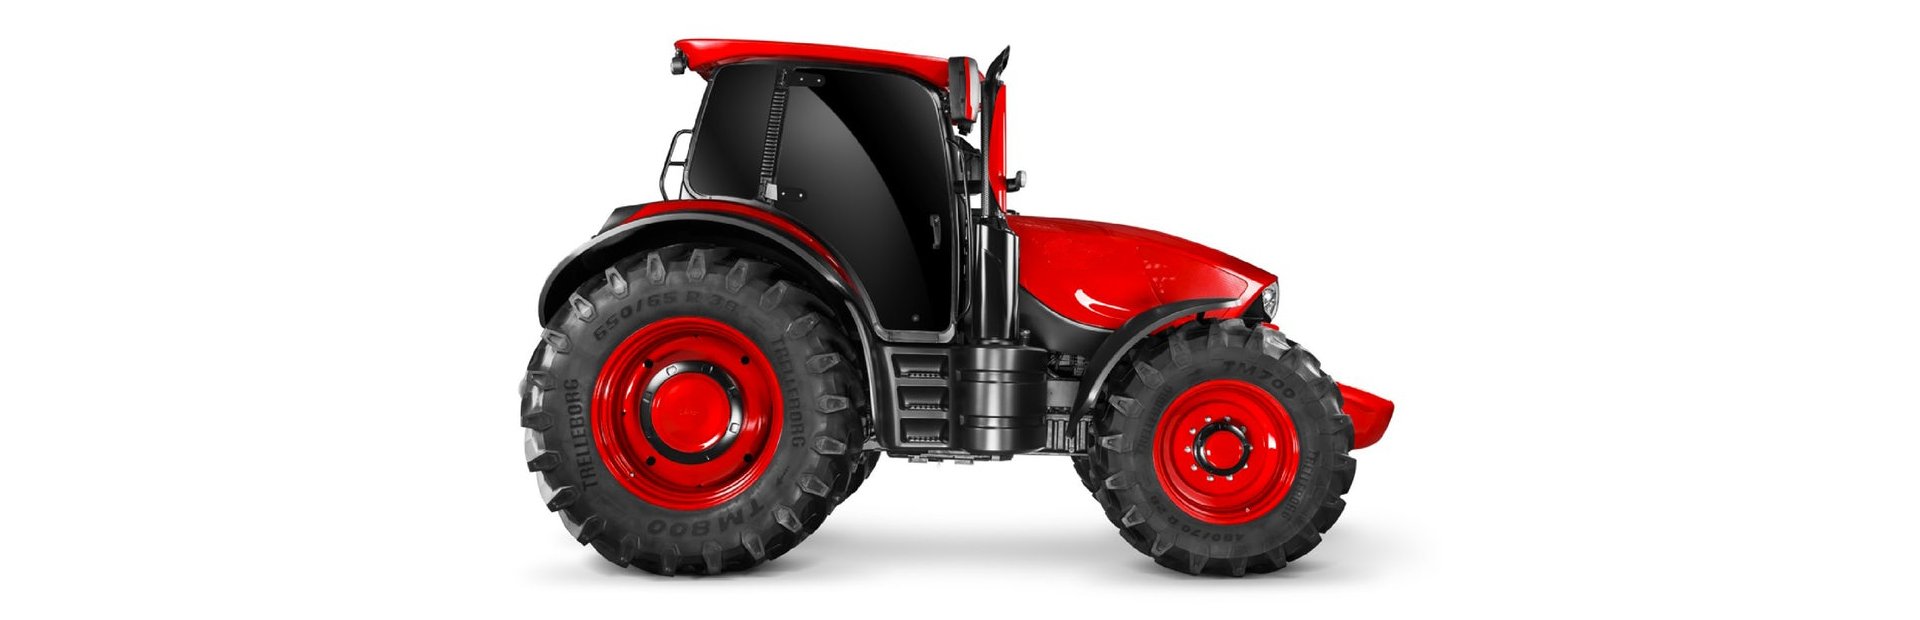 Service parts for tractors